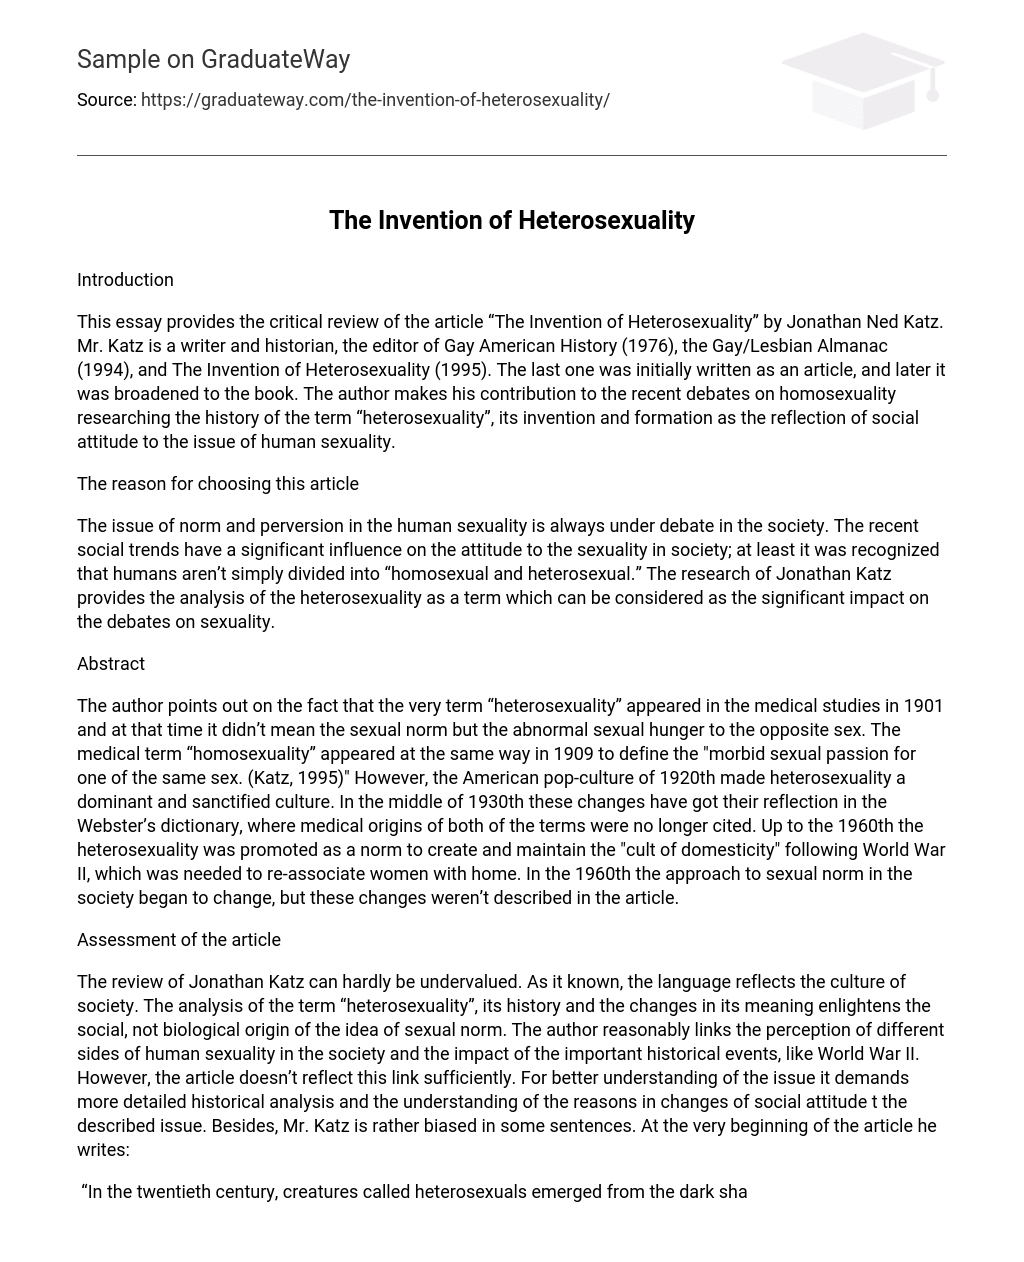 The Invention of Heterosexuality Short Summary